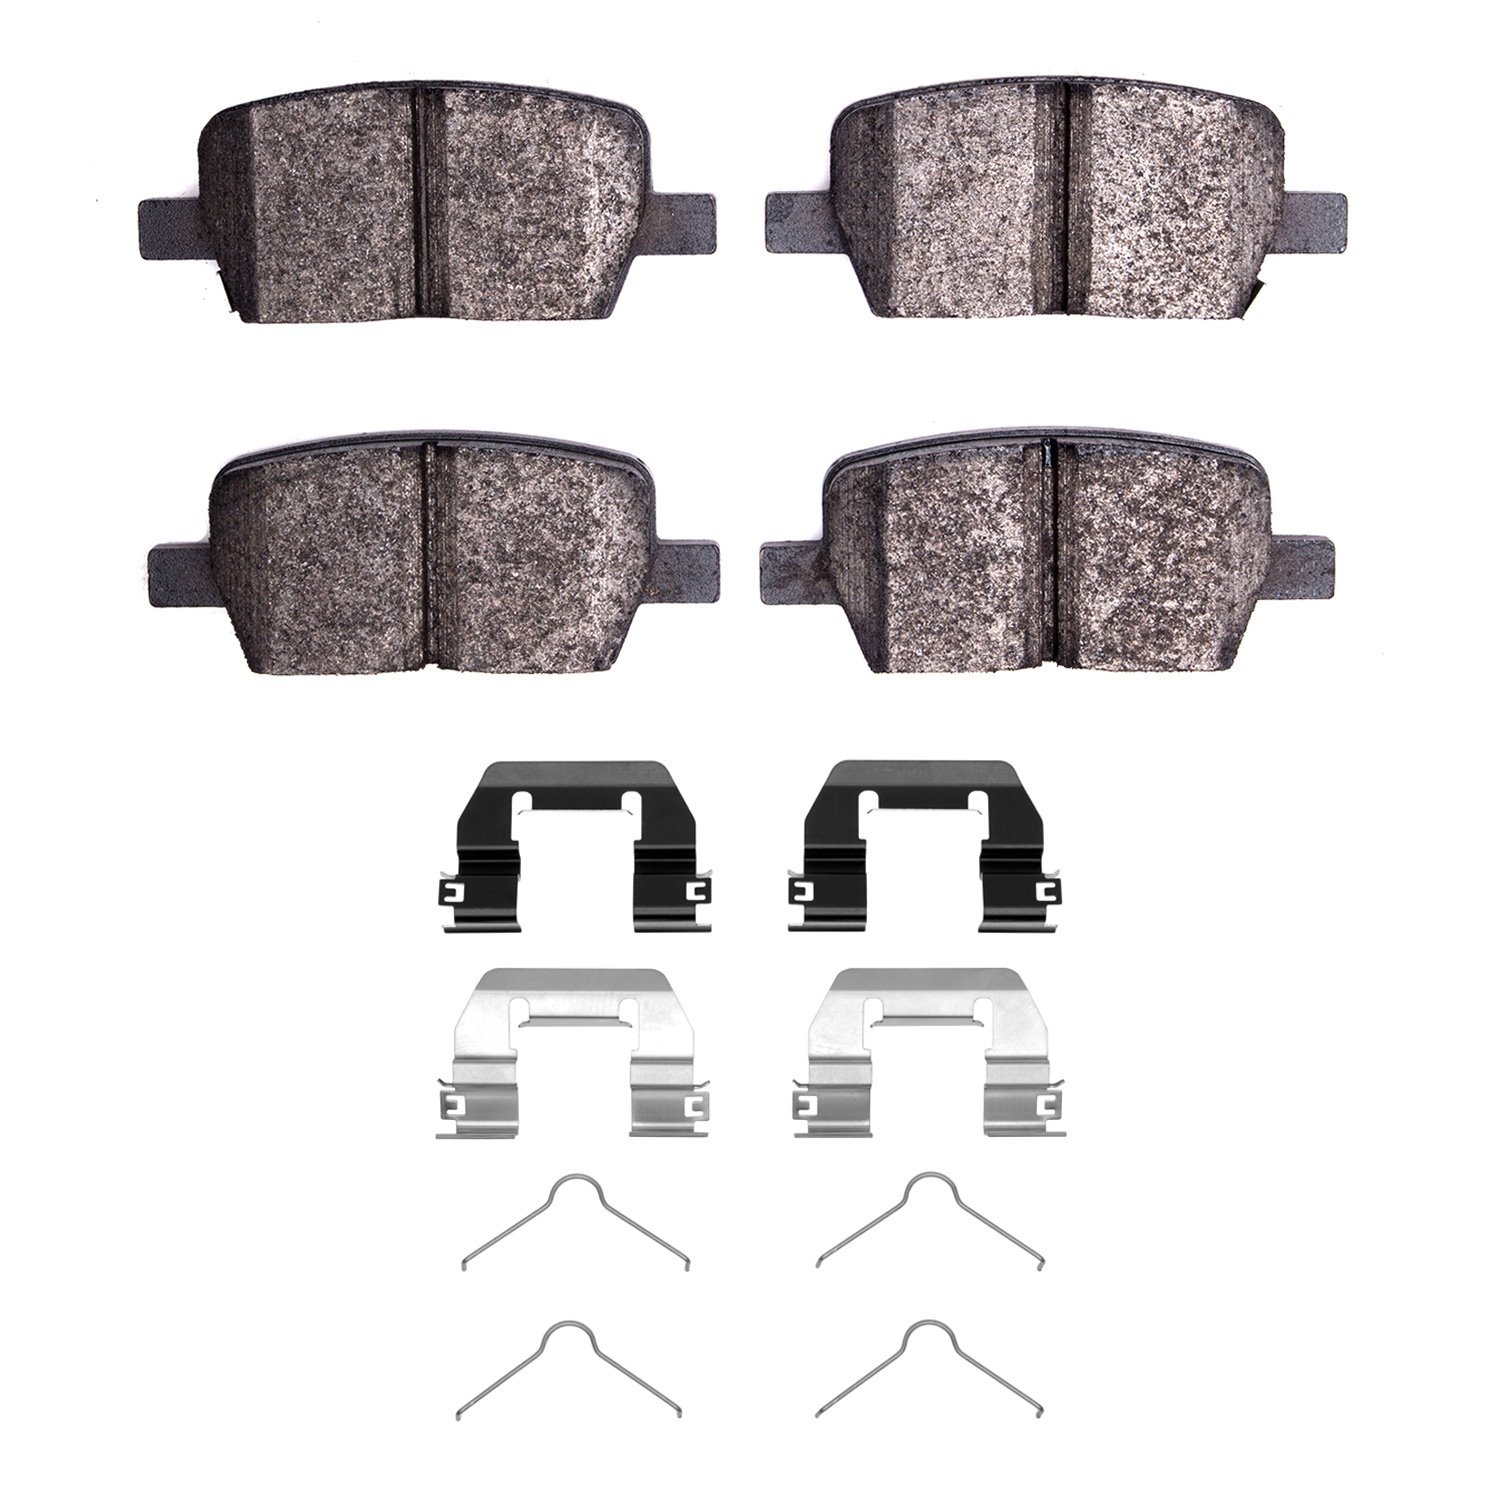 1600-1914-01 5000 Euro Ceramic Brake Pads & Hardware Kit, Fits Select GM, Position: Rear